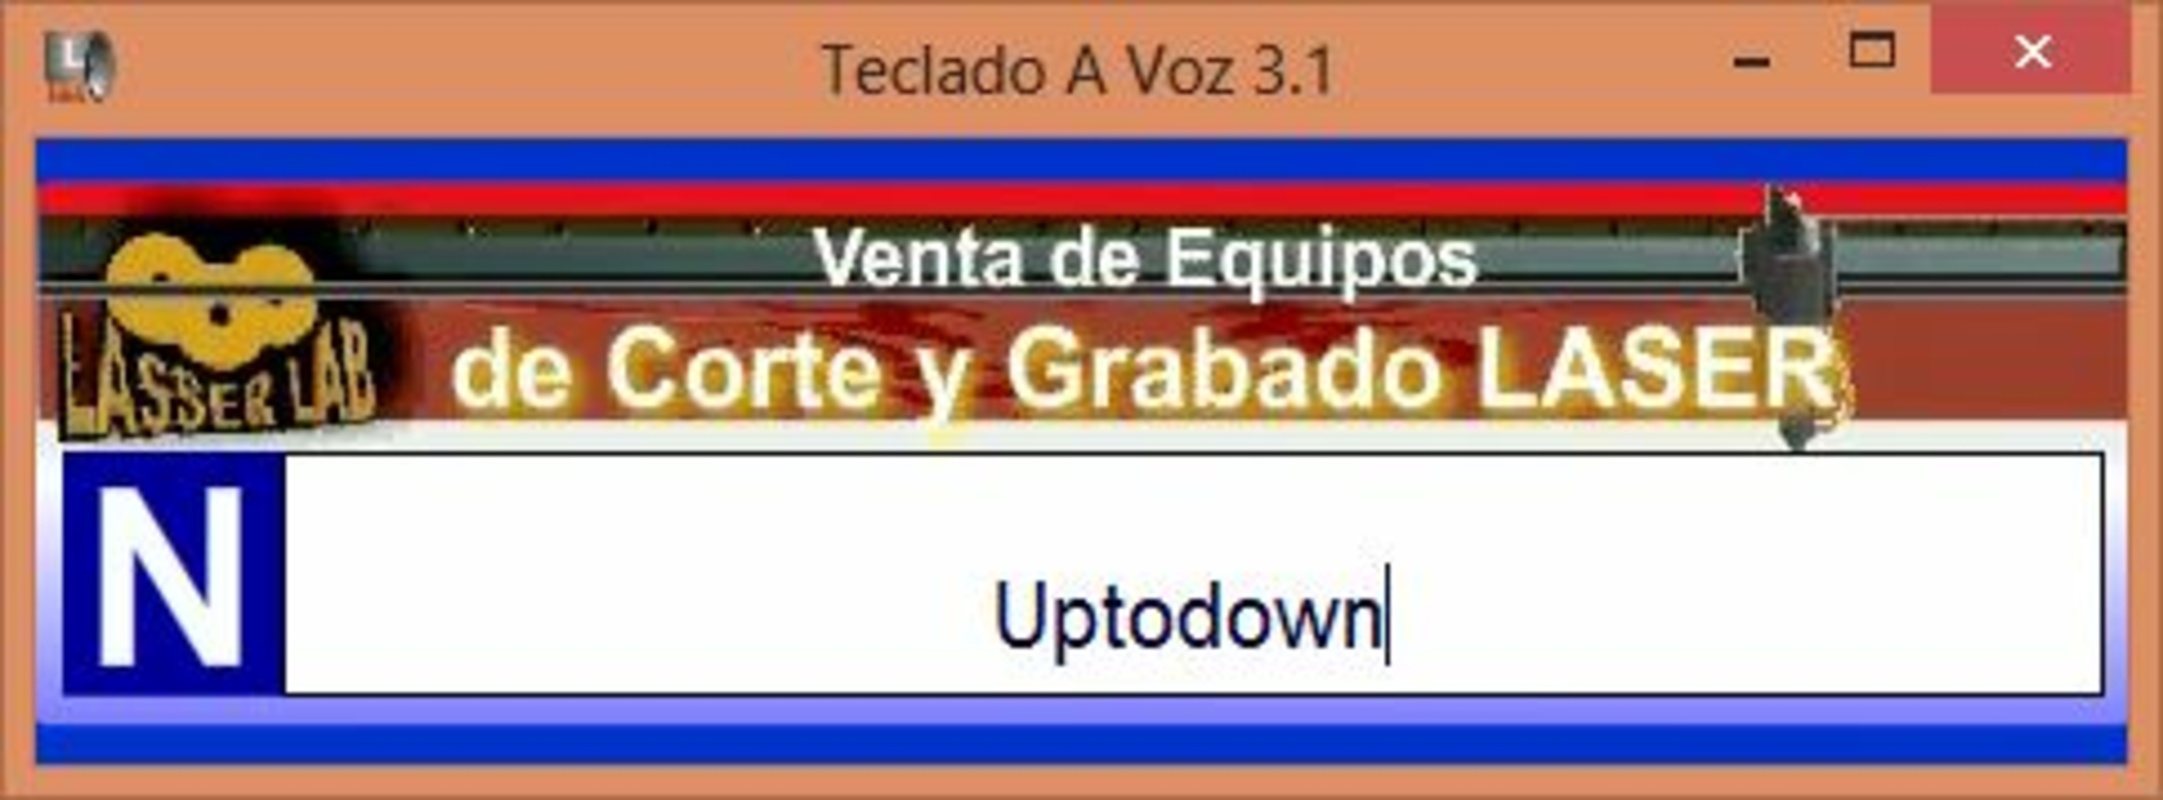 Teclado a Voz 3.1 for Windows Screenshot 1